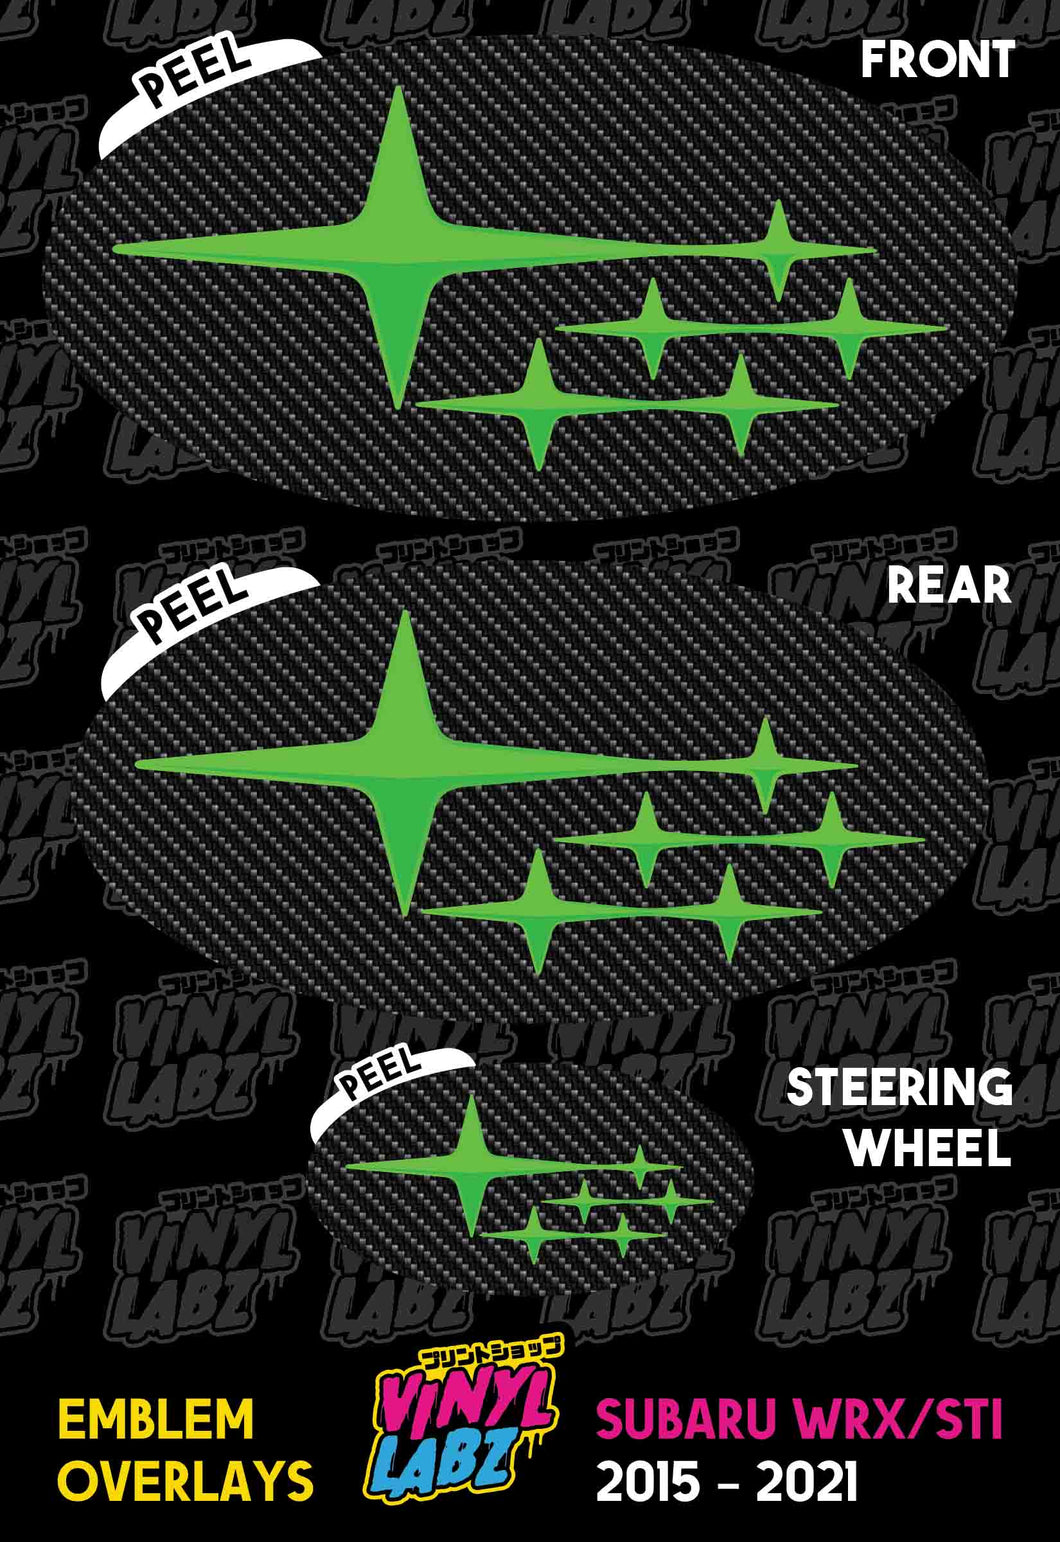 Subaru Vinyl Emblem Overlay (Carbon Fiber and Green) | 2015-2021 Subaru WRX/STI